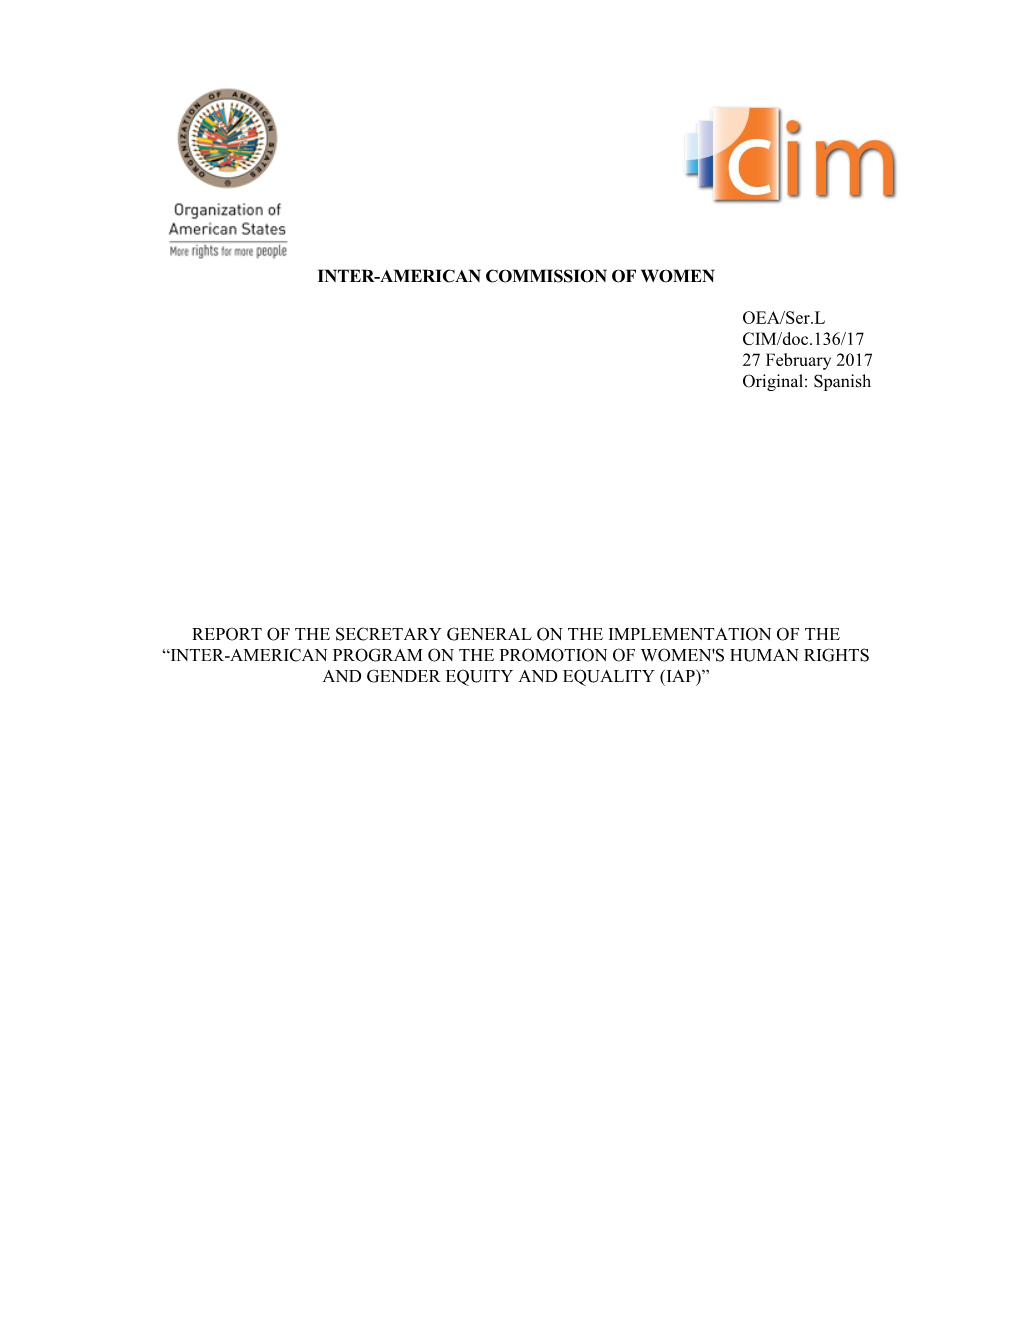 INTER-AMERICAN COMMISSION of WOMEN OEA/Ser.L CIM/Doc.136